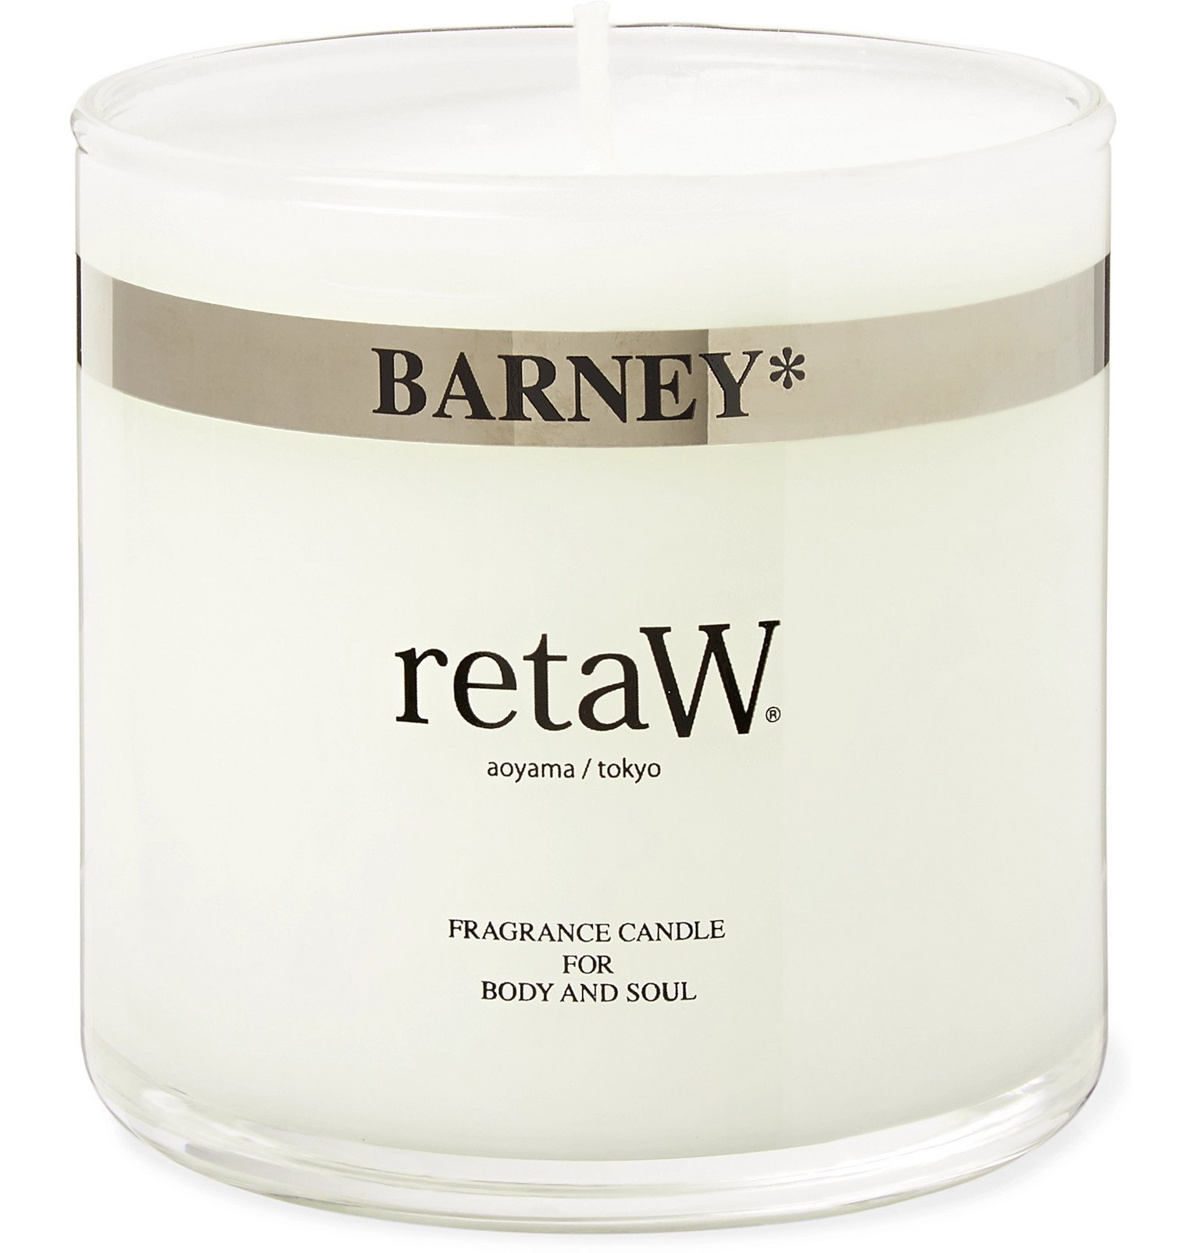 retaW - Barney Scented Candle, 145g - White retaW